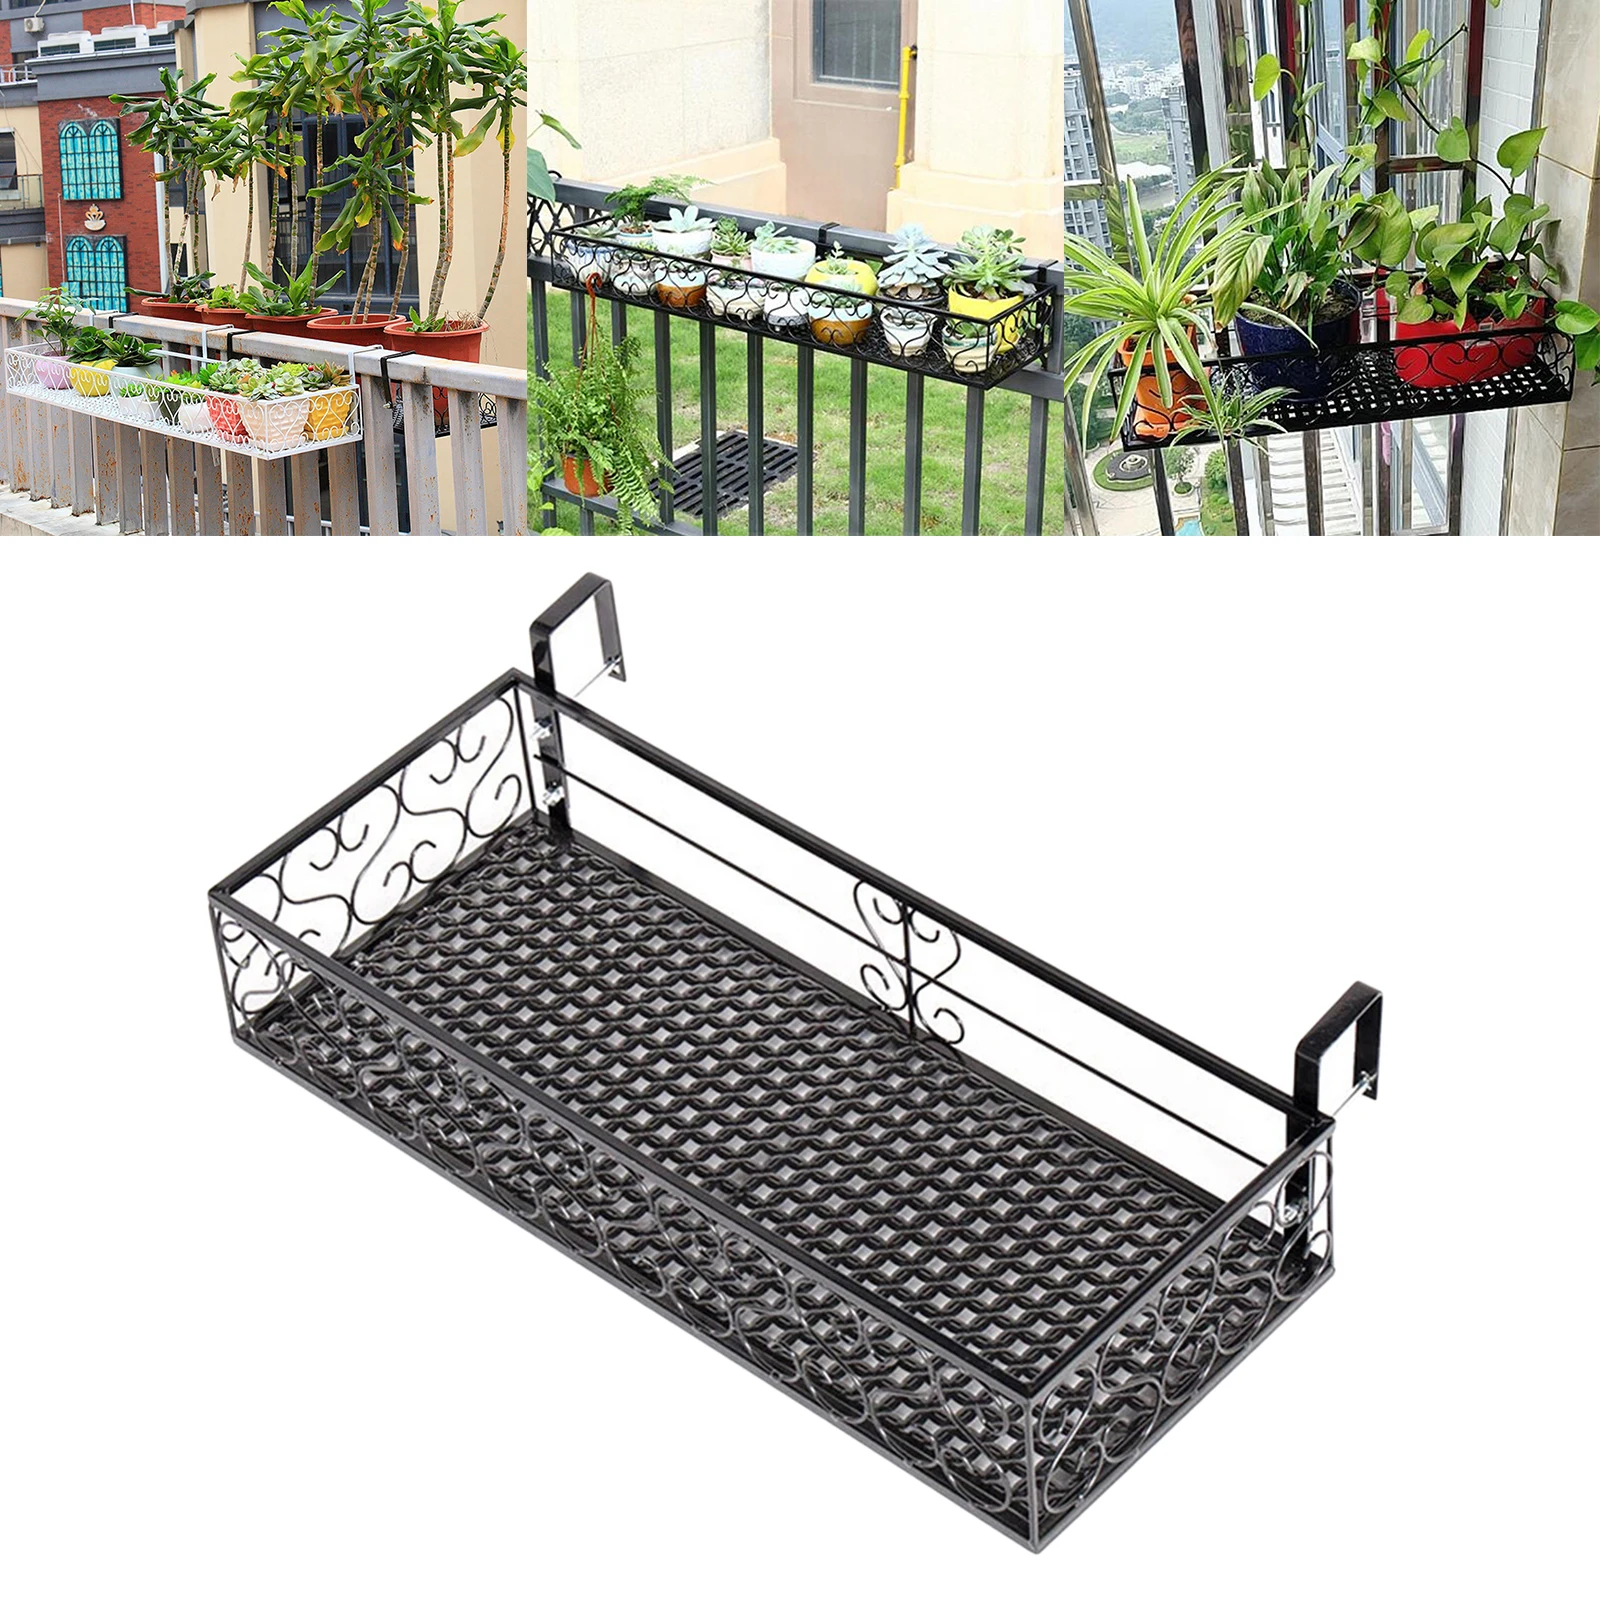 Wrought Iron Metal Planter Railing Shelf Holder er Balcony Yard Fence Flowerpot ing Rack Basket for Porches Patio Home